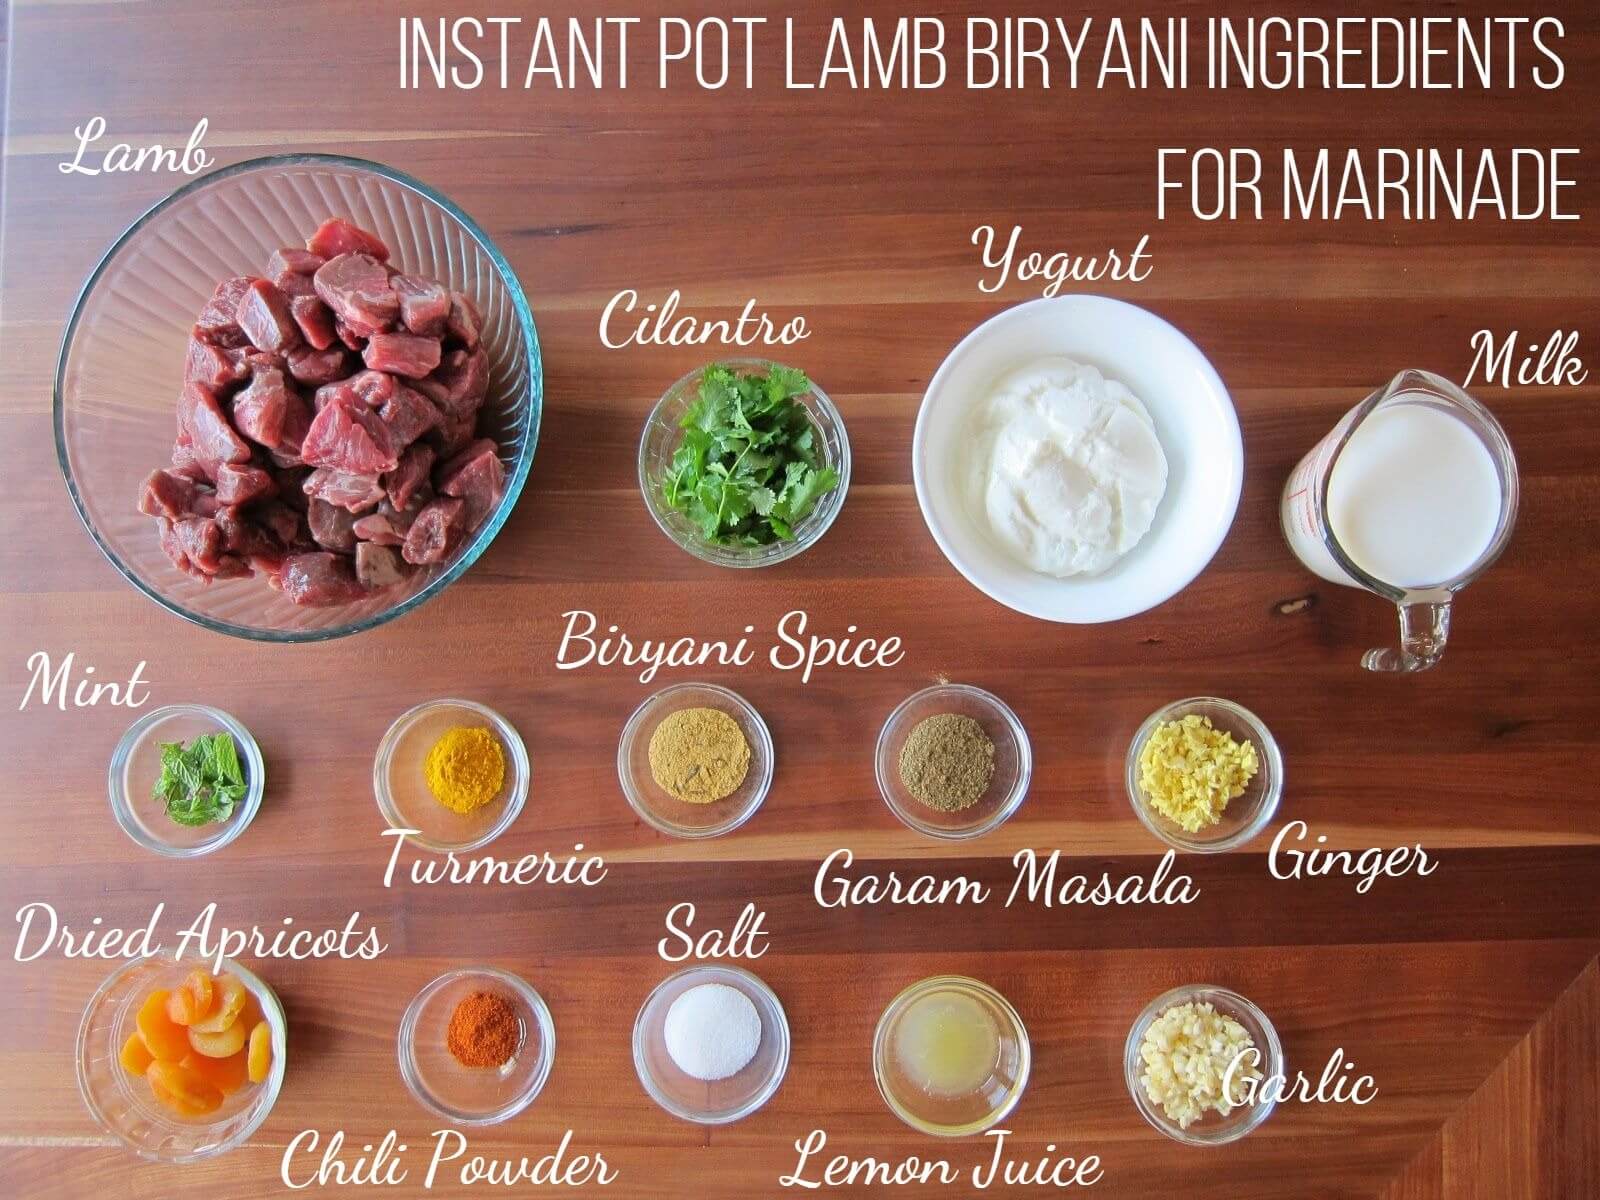 Instant Pot Lamb Biryani Ingredients for marinade.